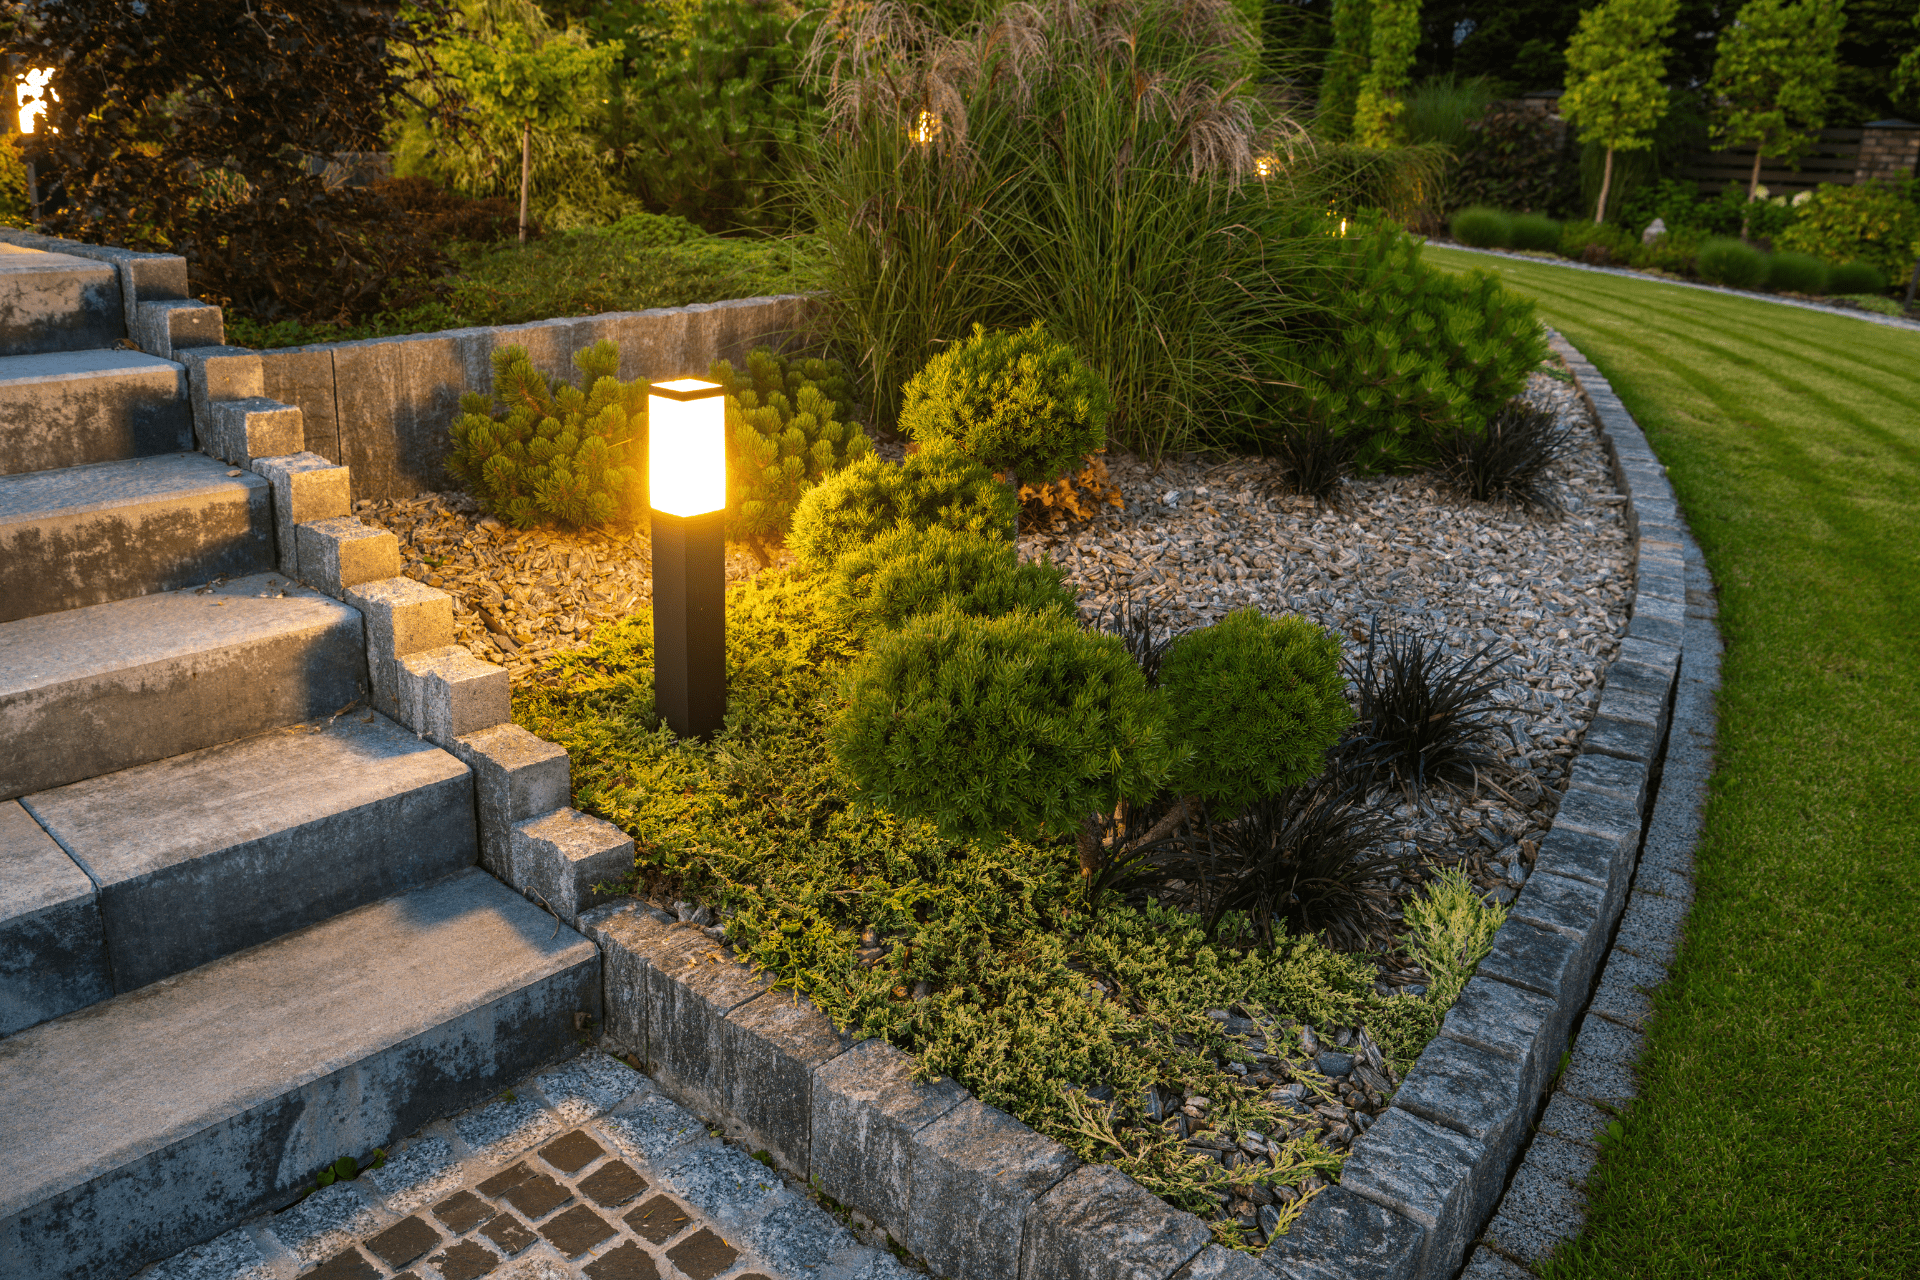 A bollard light used to illuminate the area near the steps in a backyard